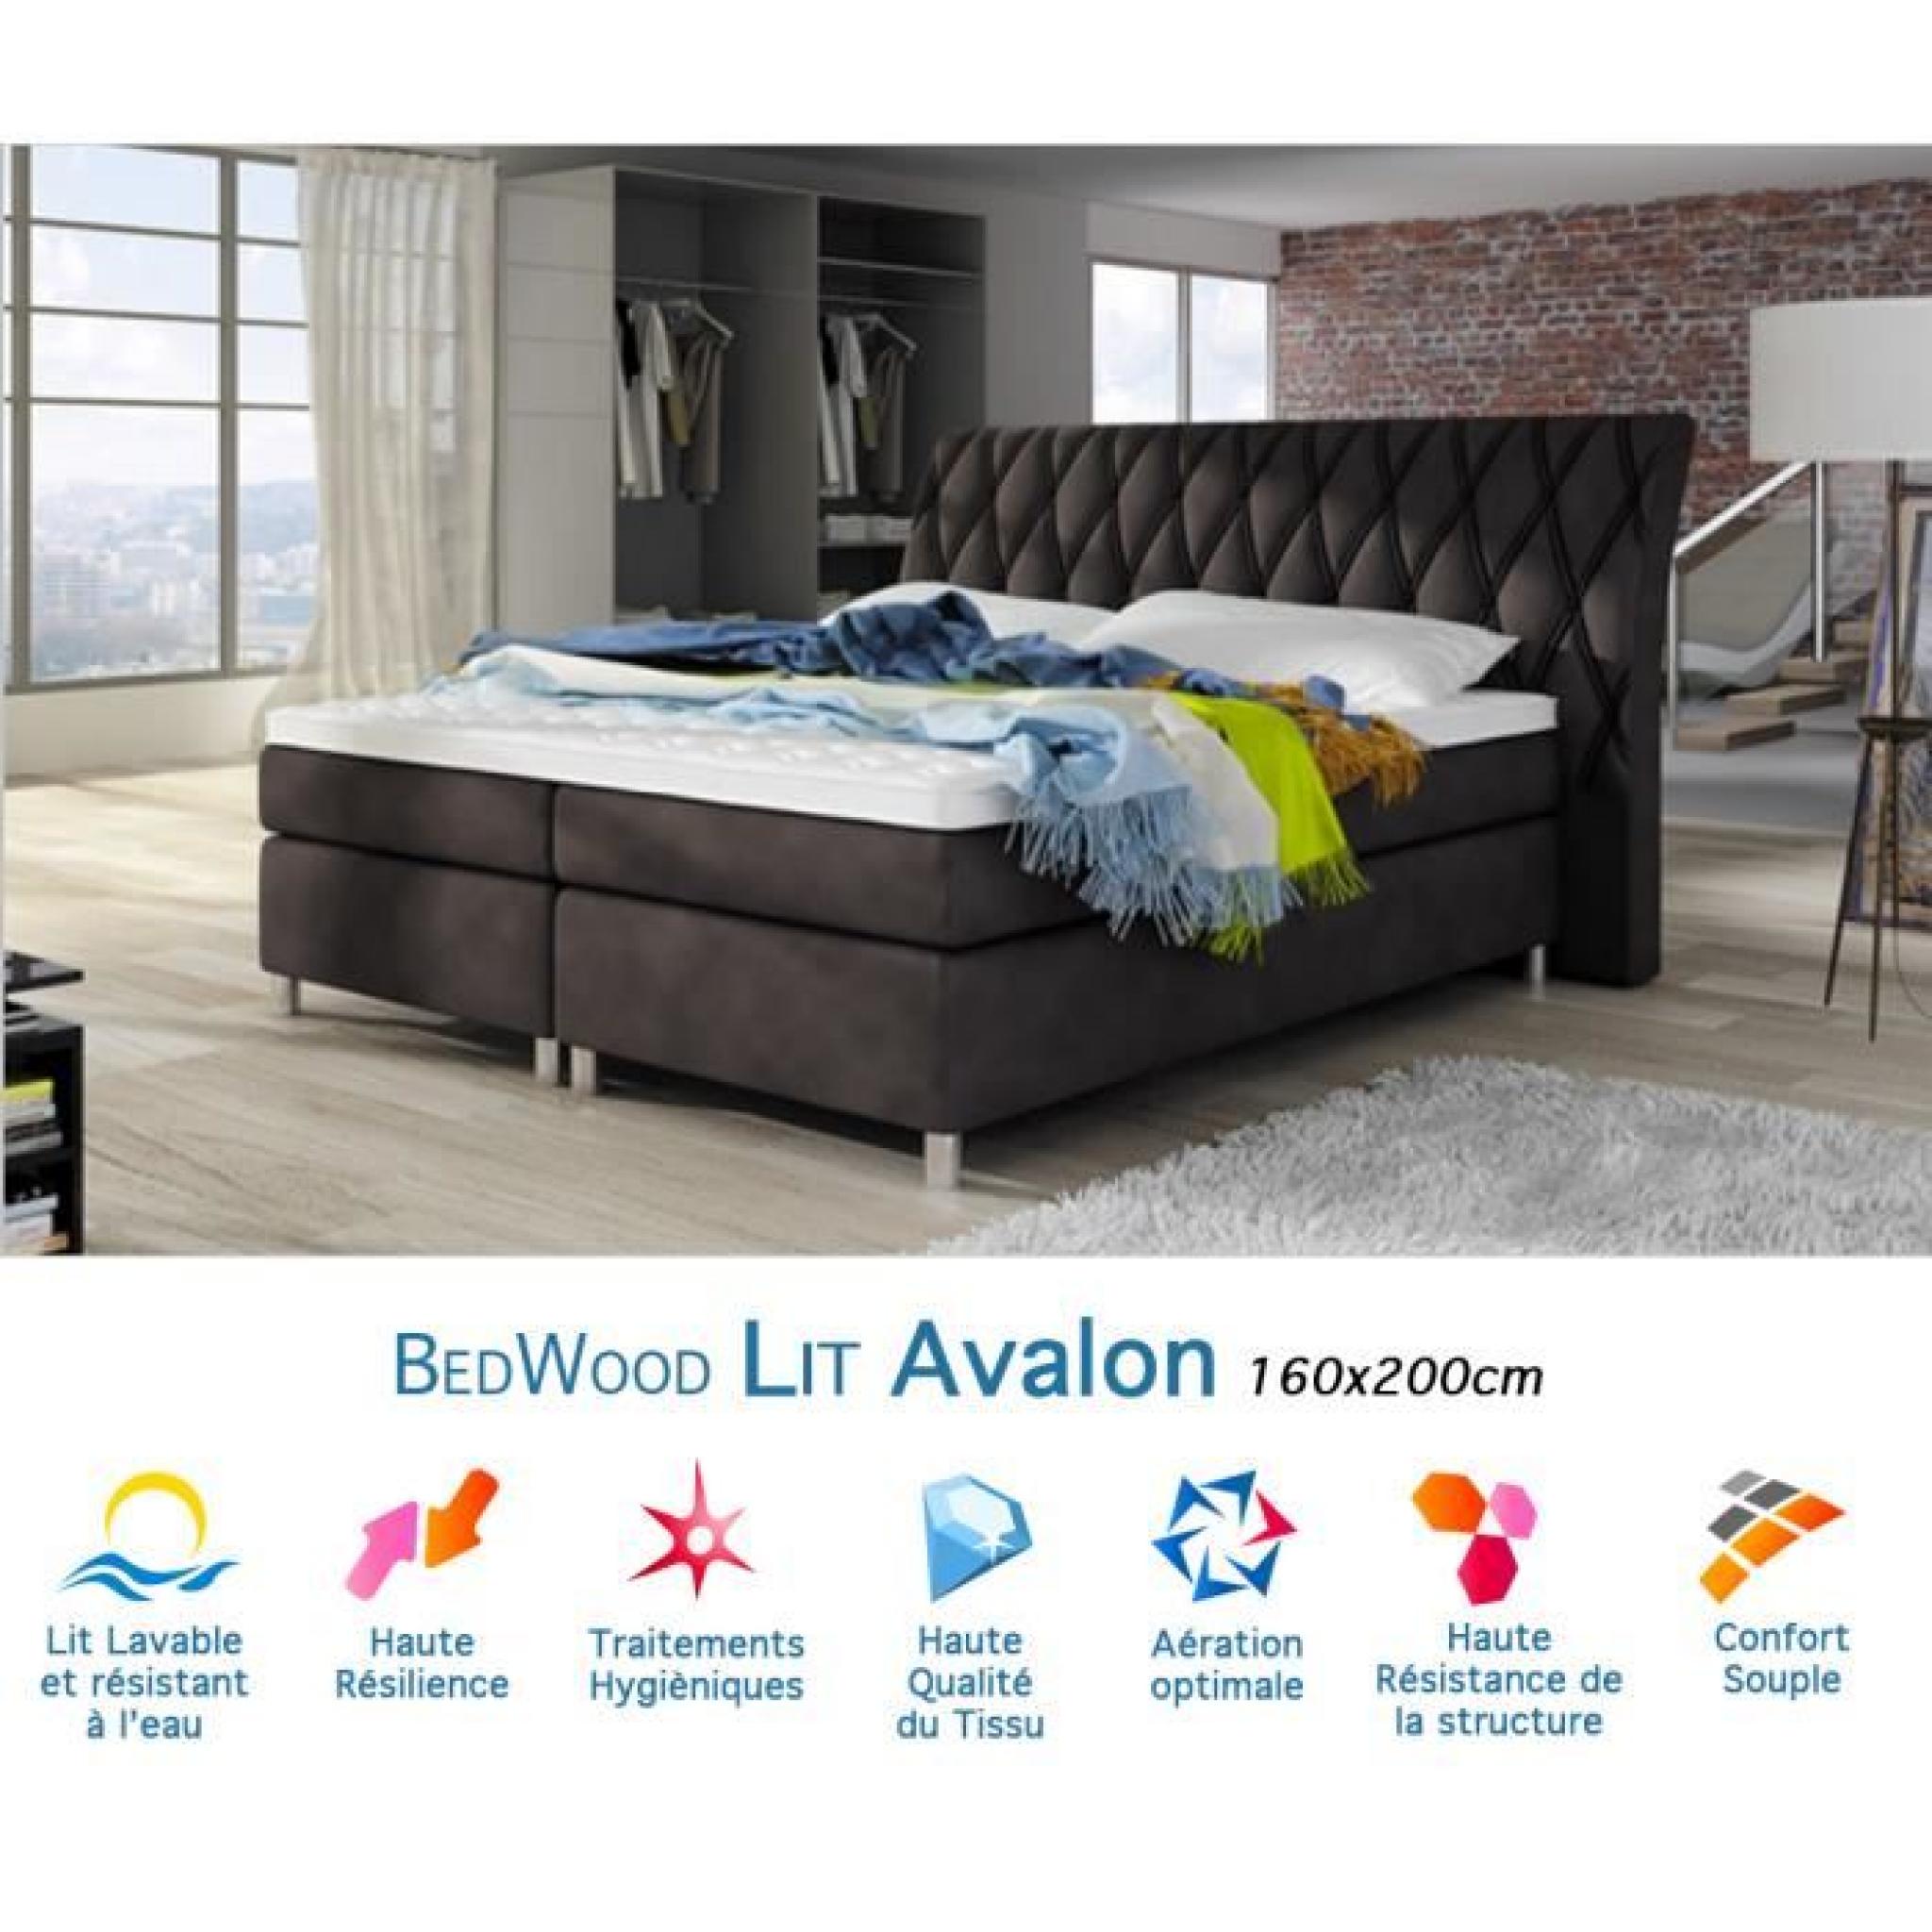 Lit Design Bedwood Avalon 160x200cm